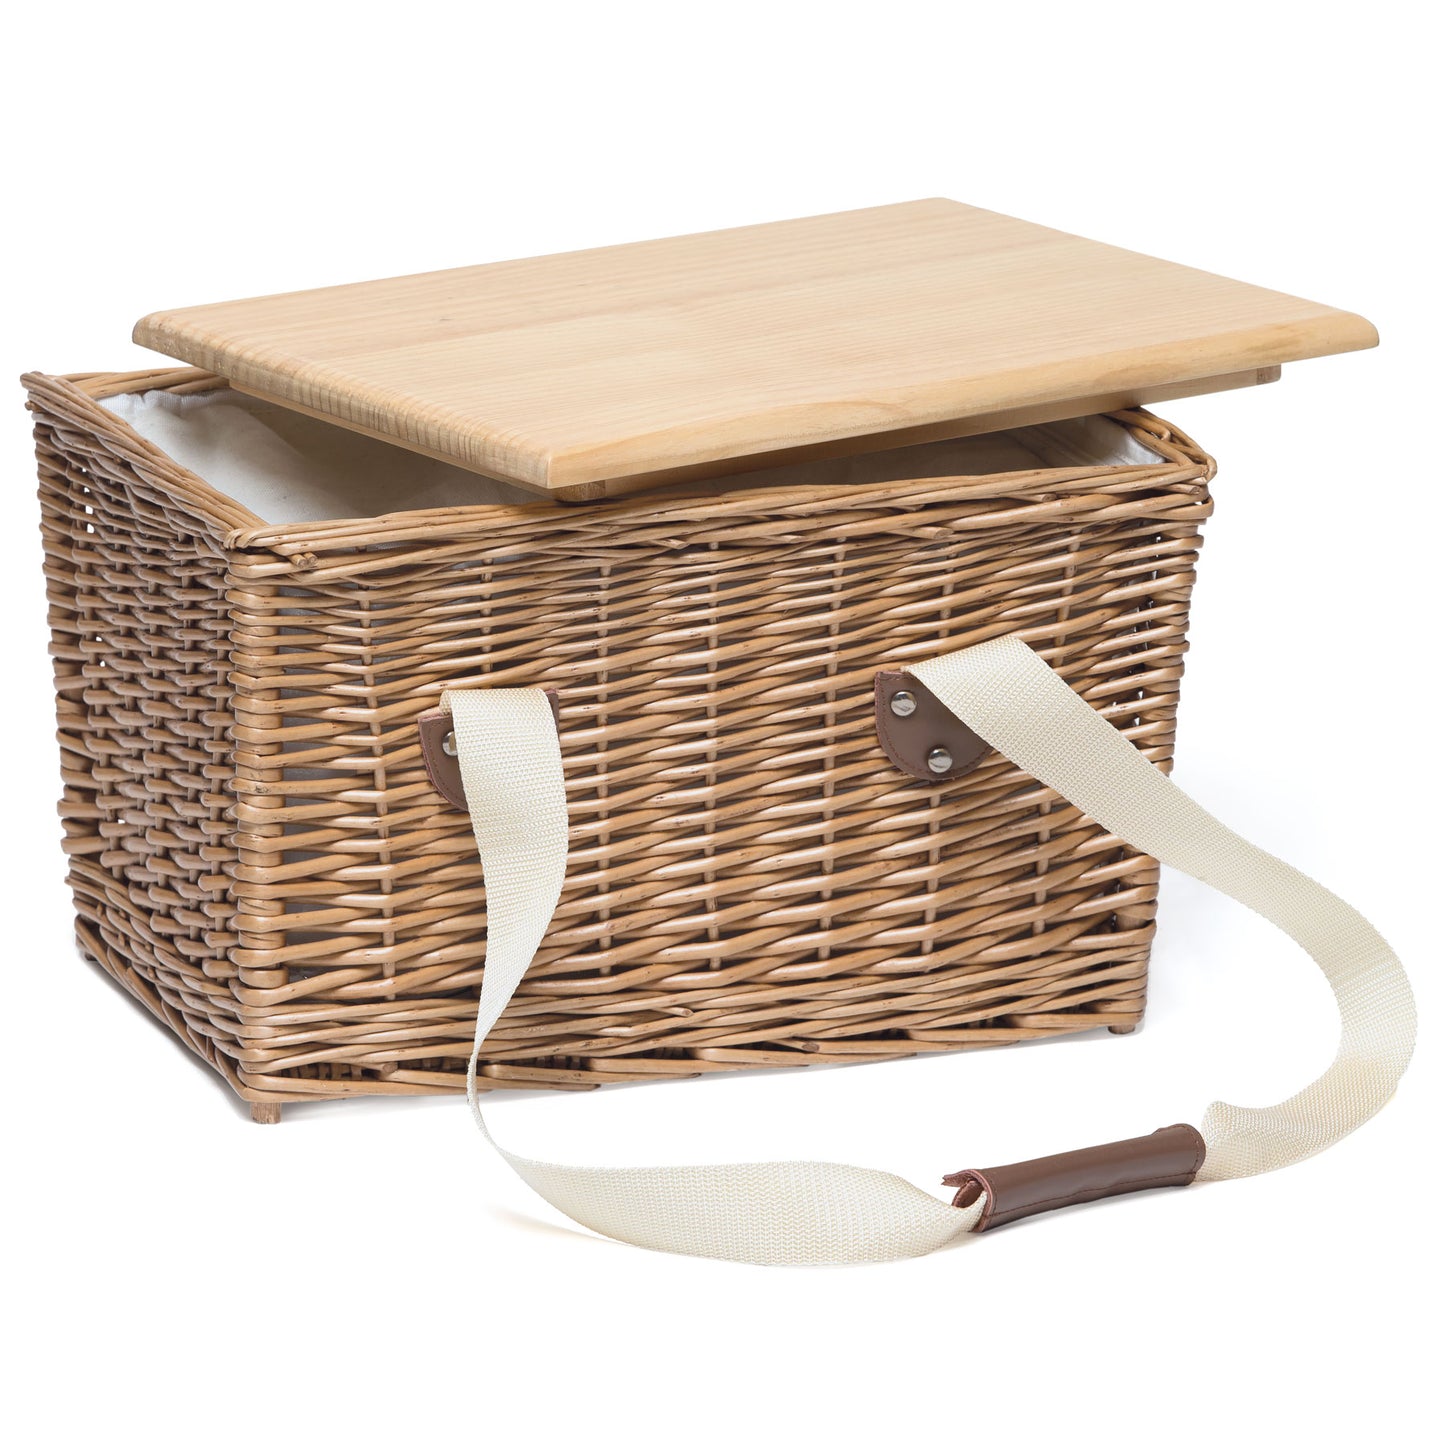 Engraved picnic basket